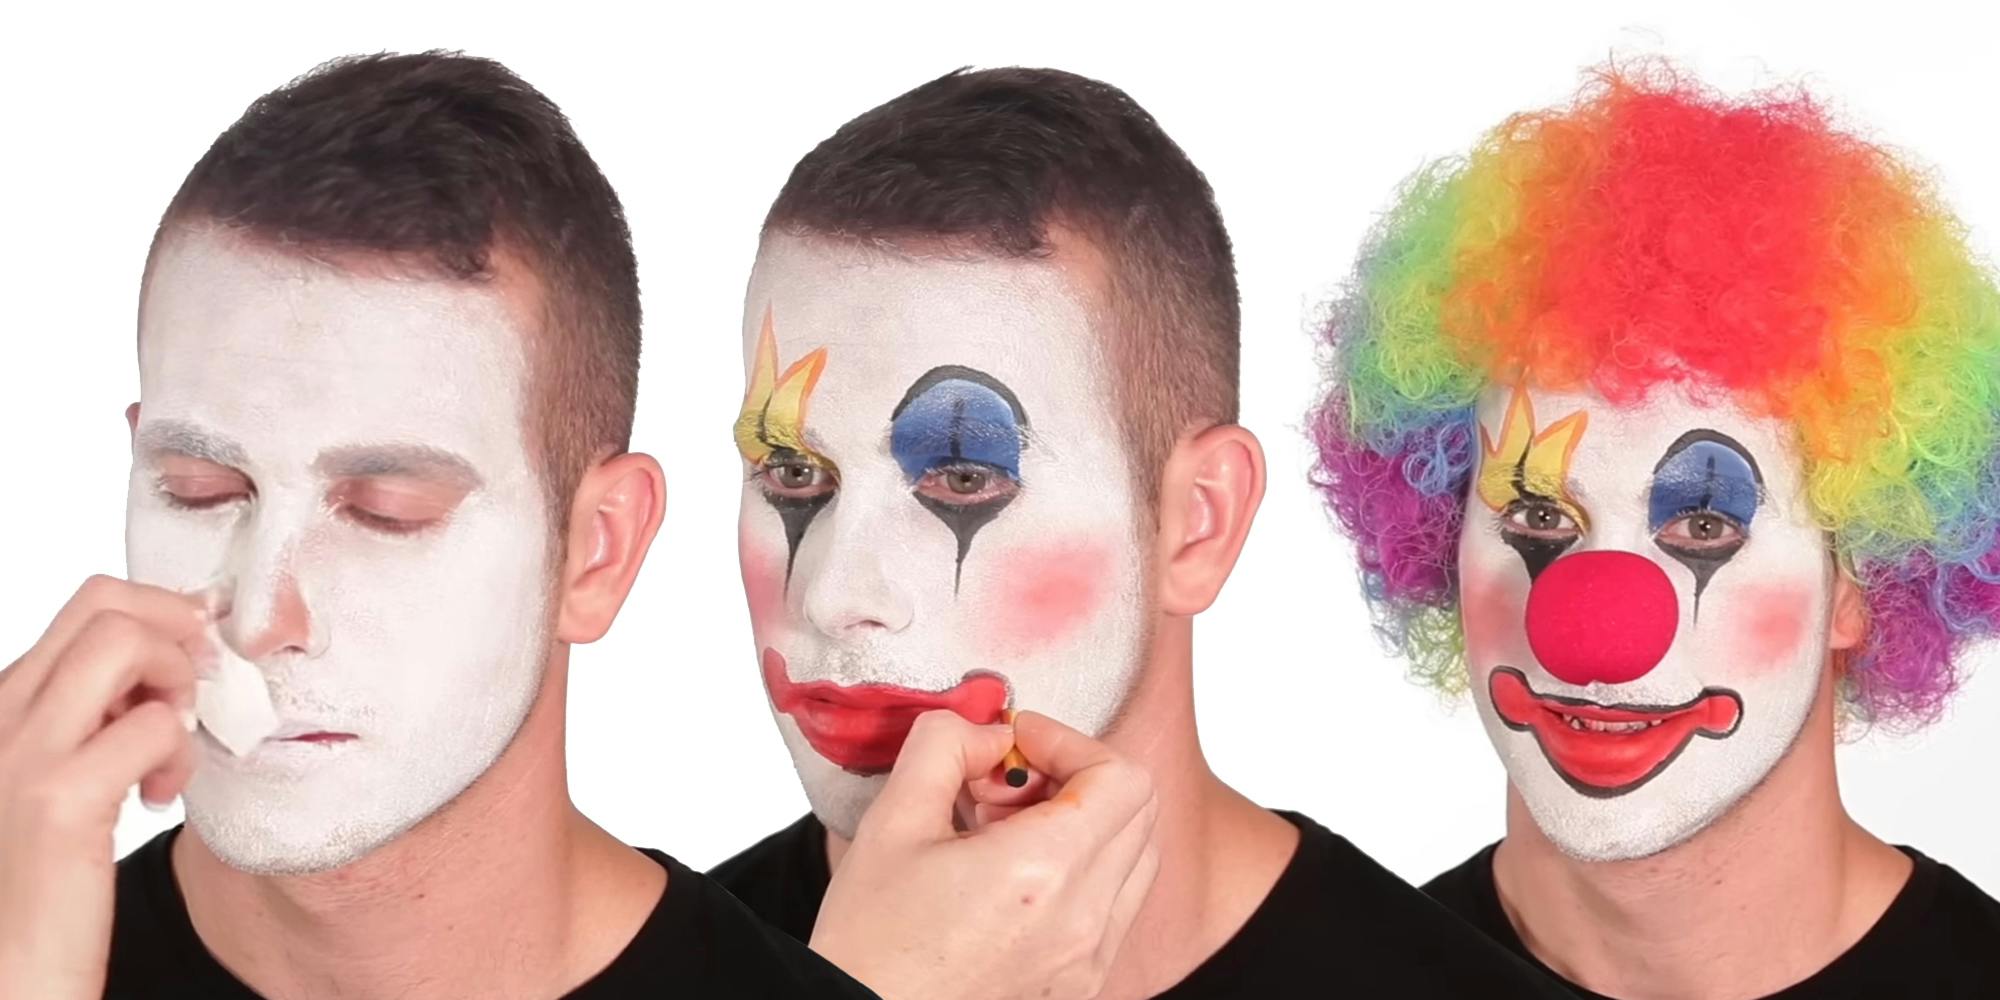 Putting on clown makeup memes